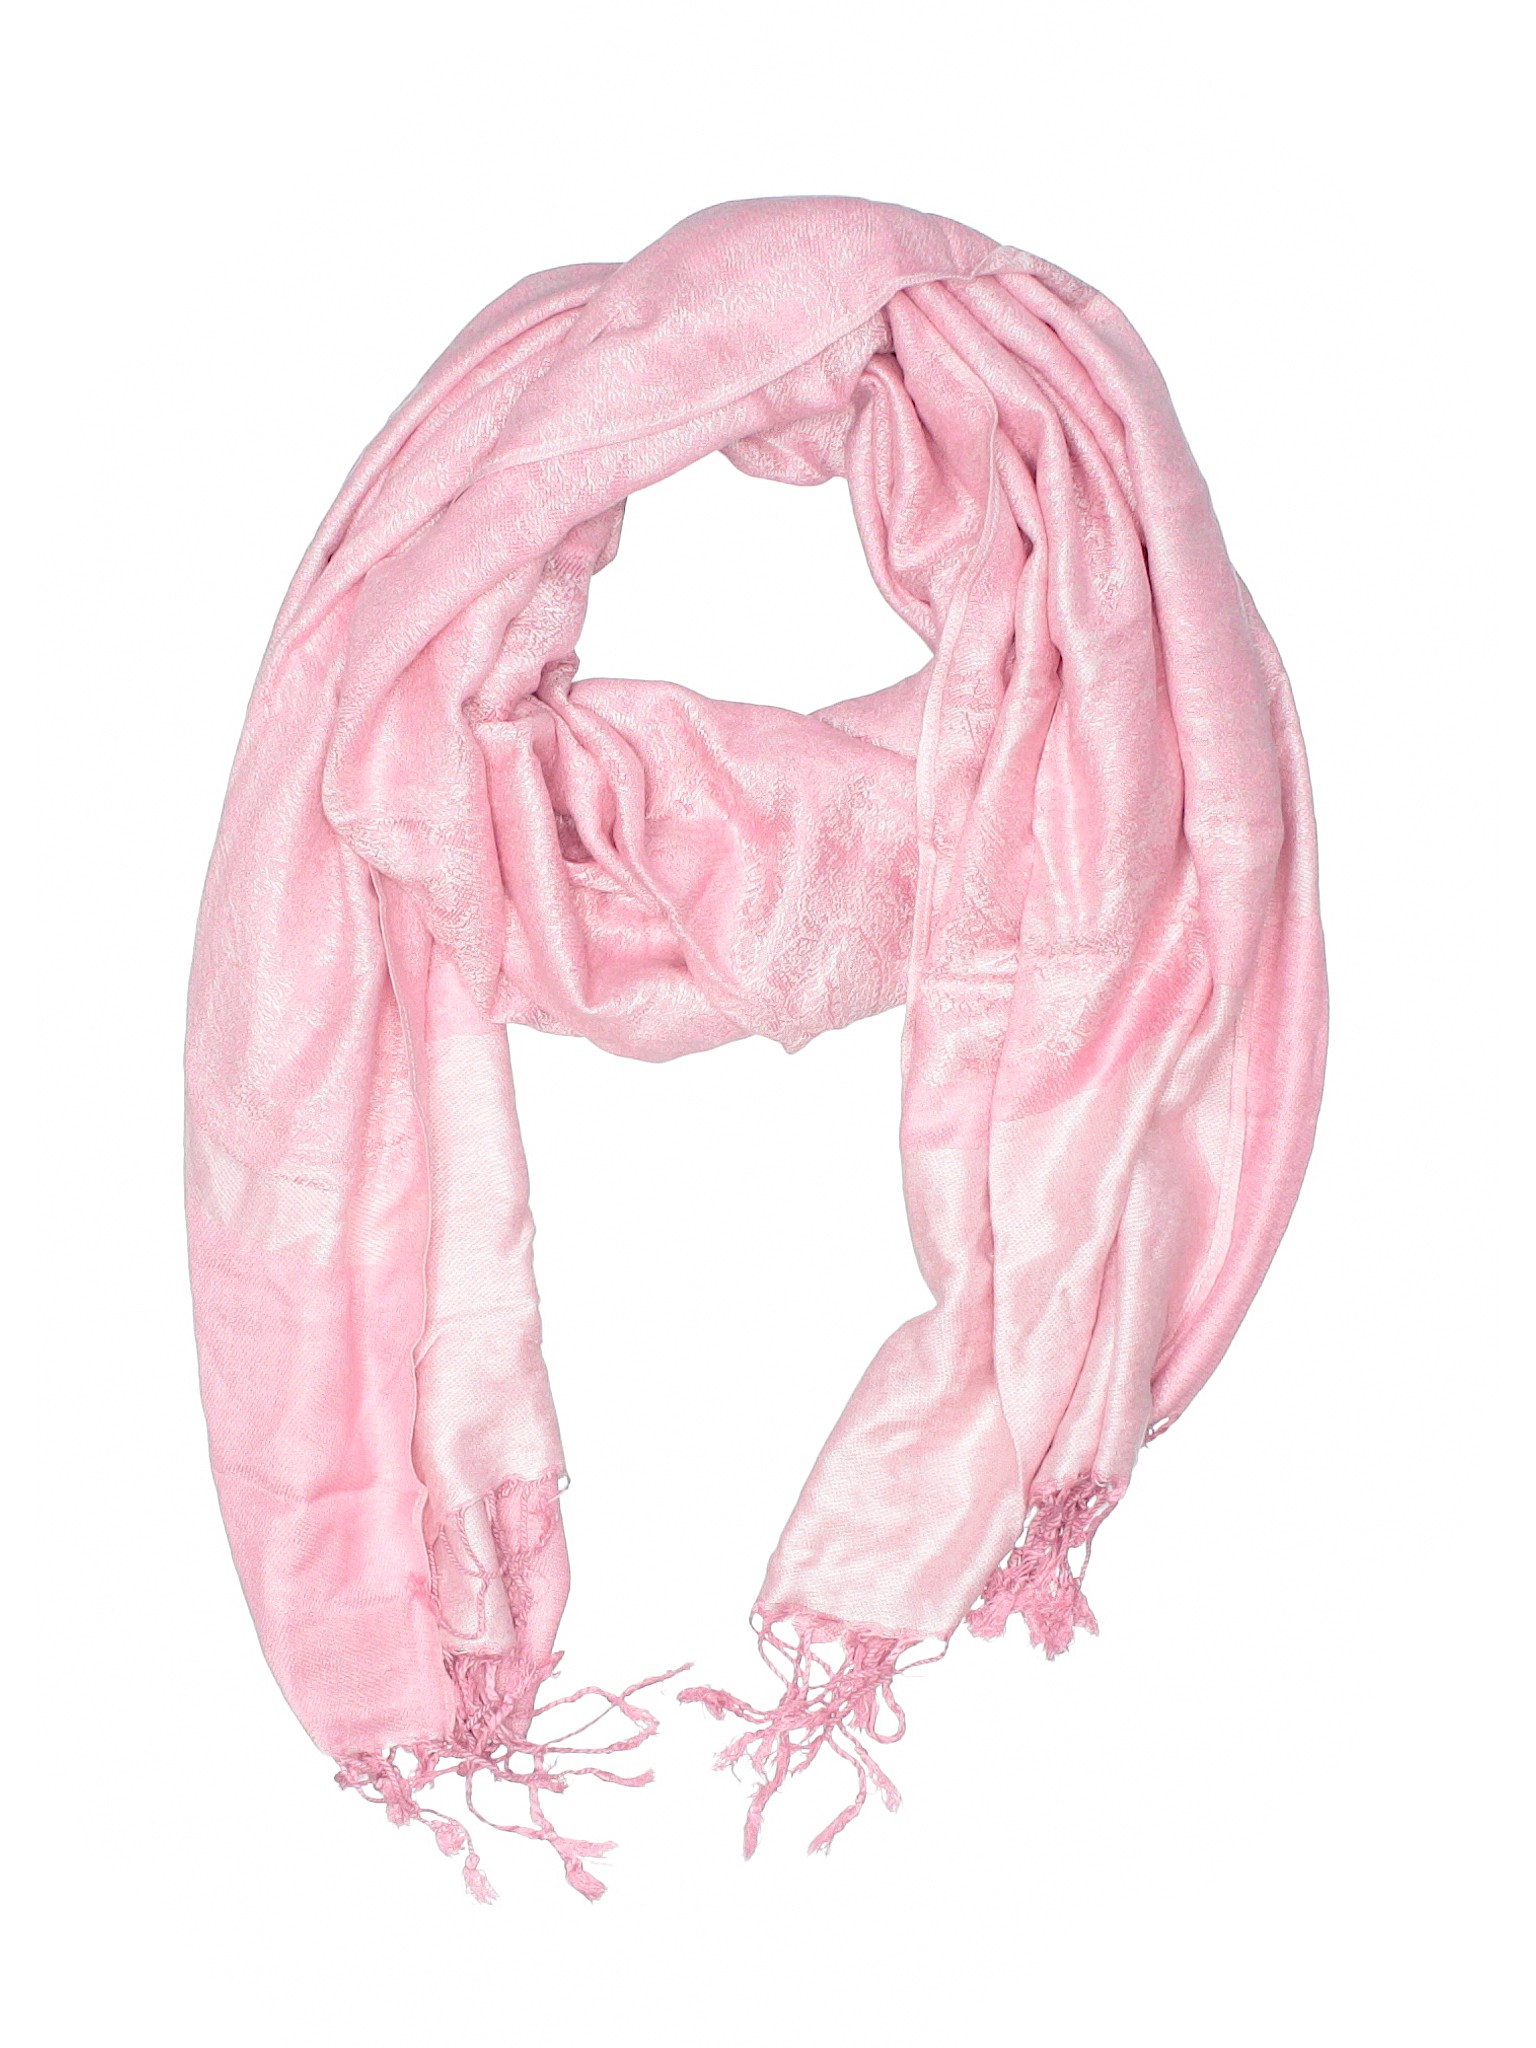 Assorted Brands Women Pink Scarf One Size | eBay